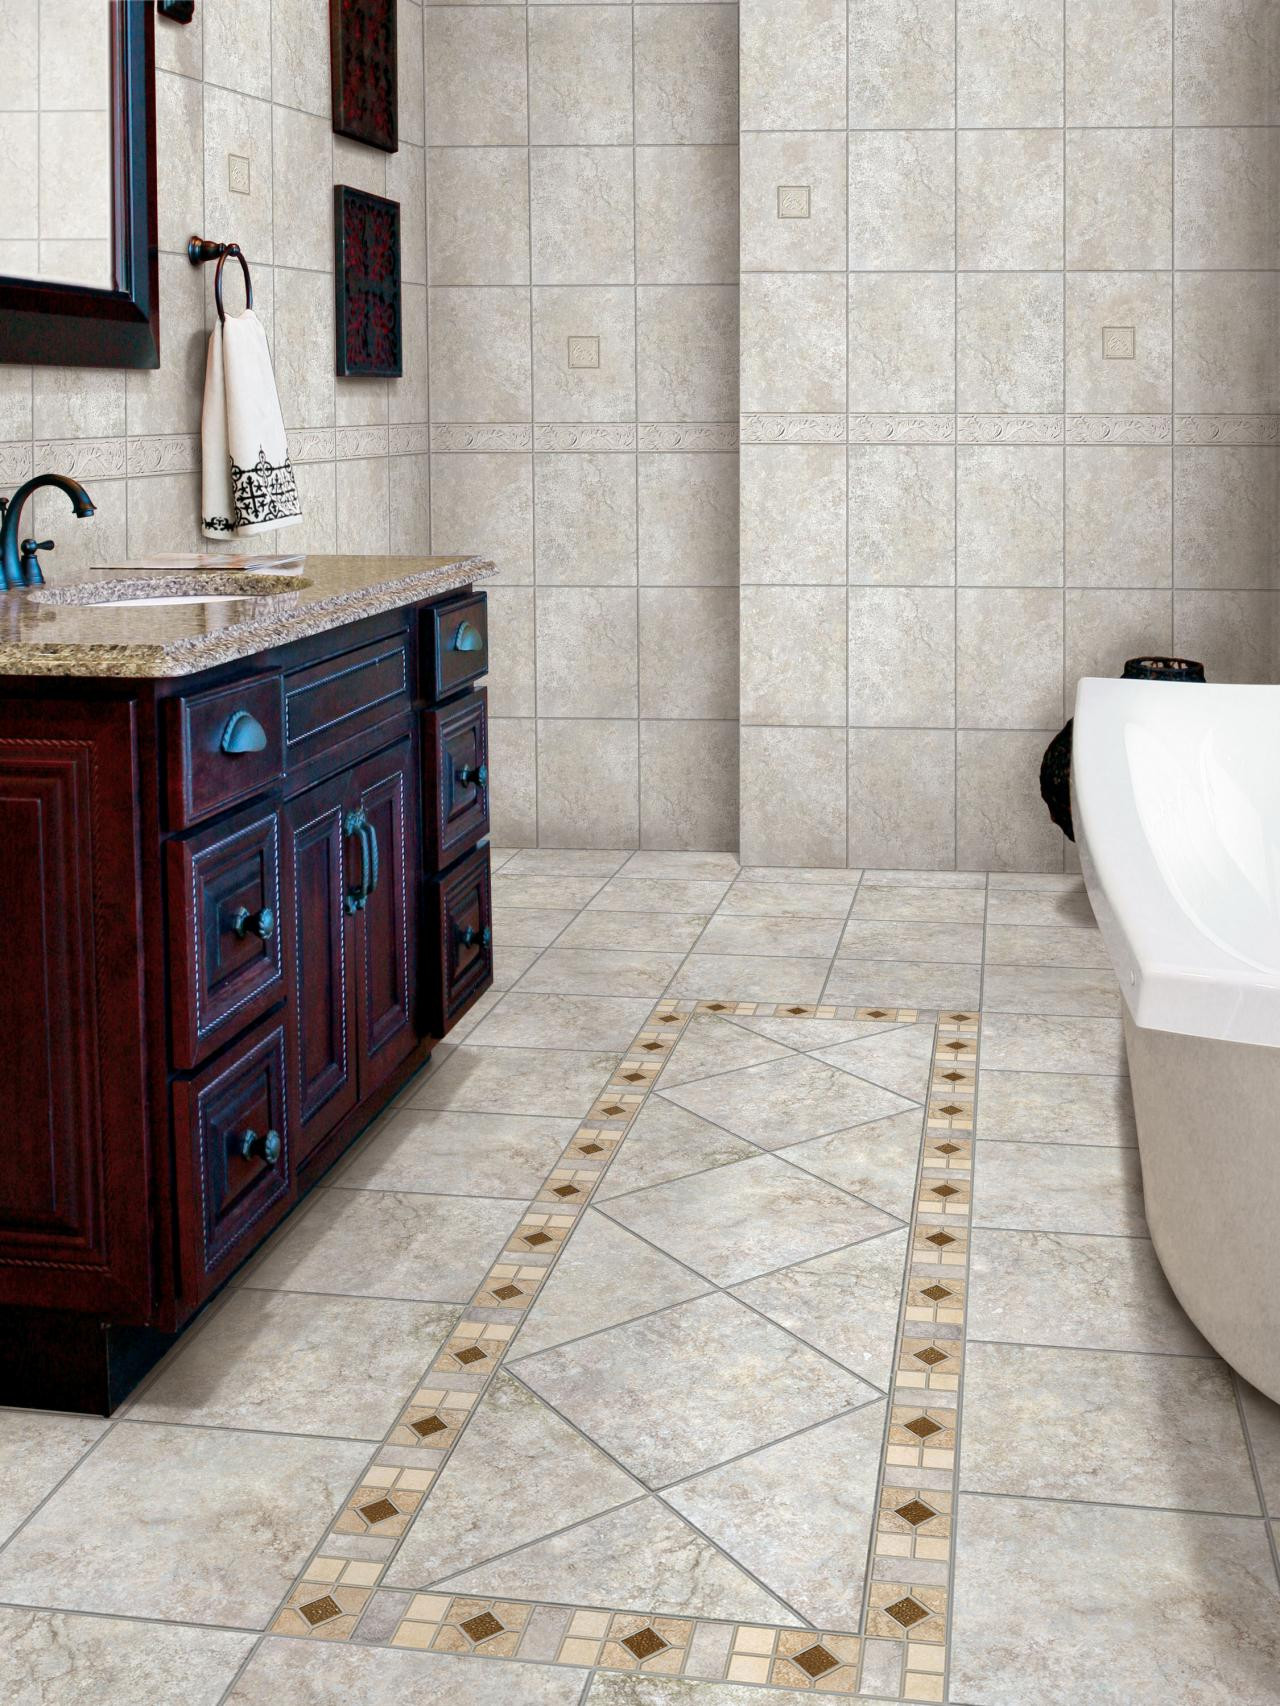 Tile Floors For Bathrooms
 How to tiling a bathroom floor right tips Interior